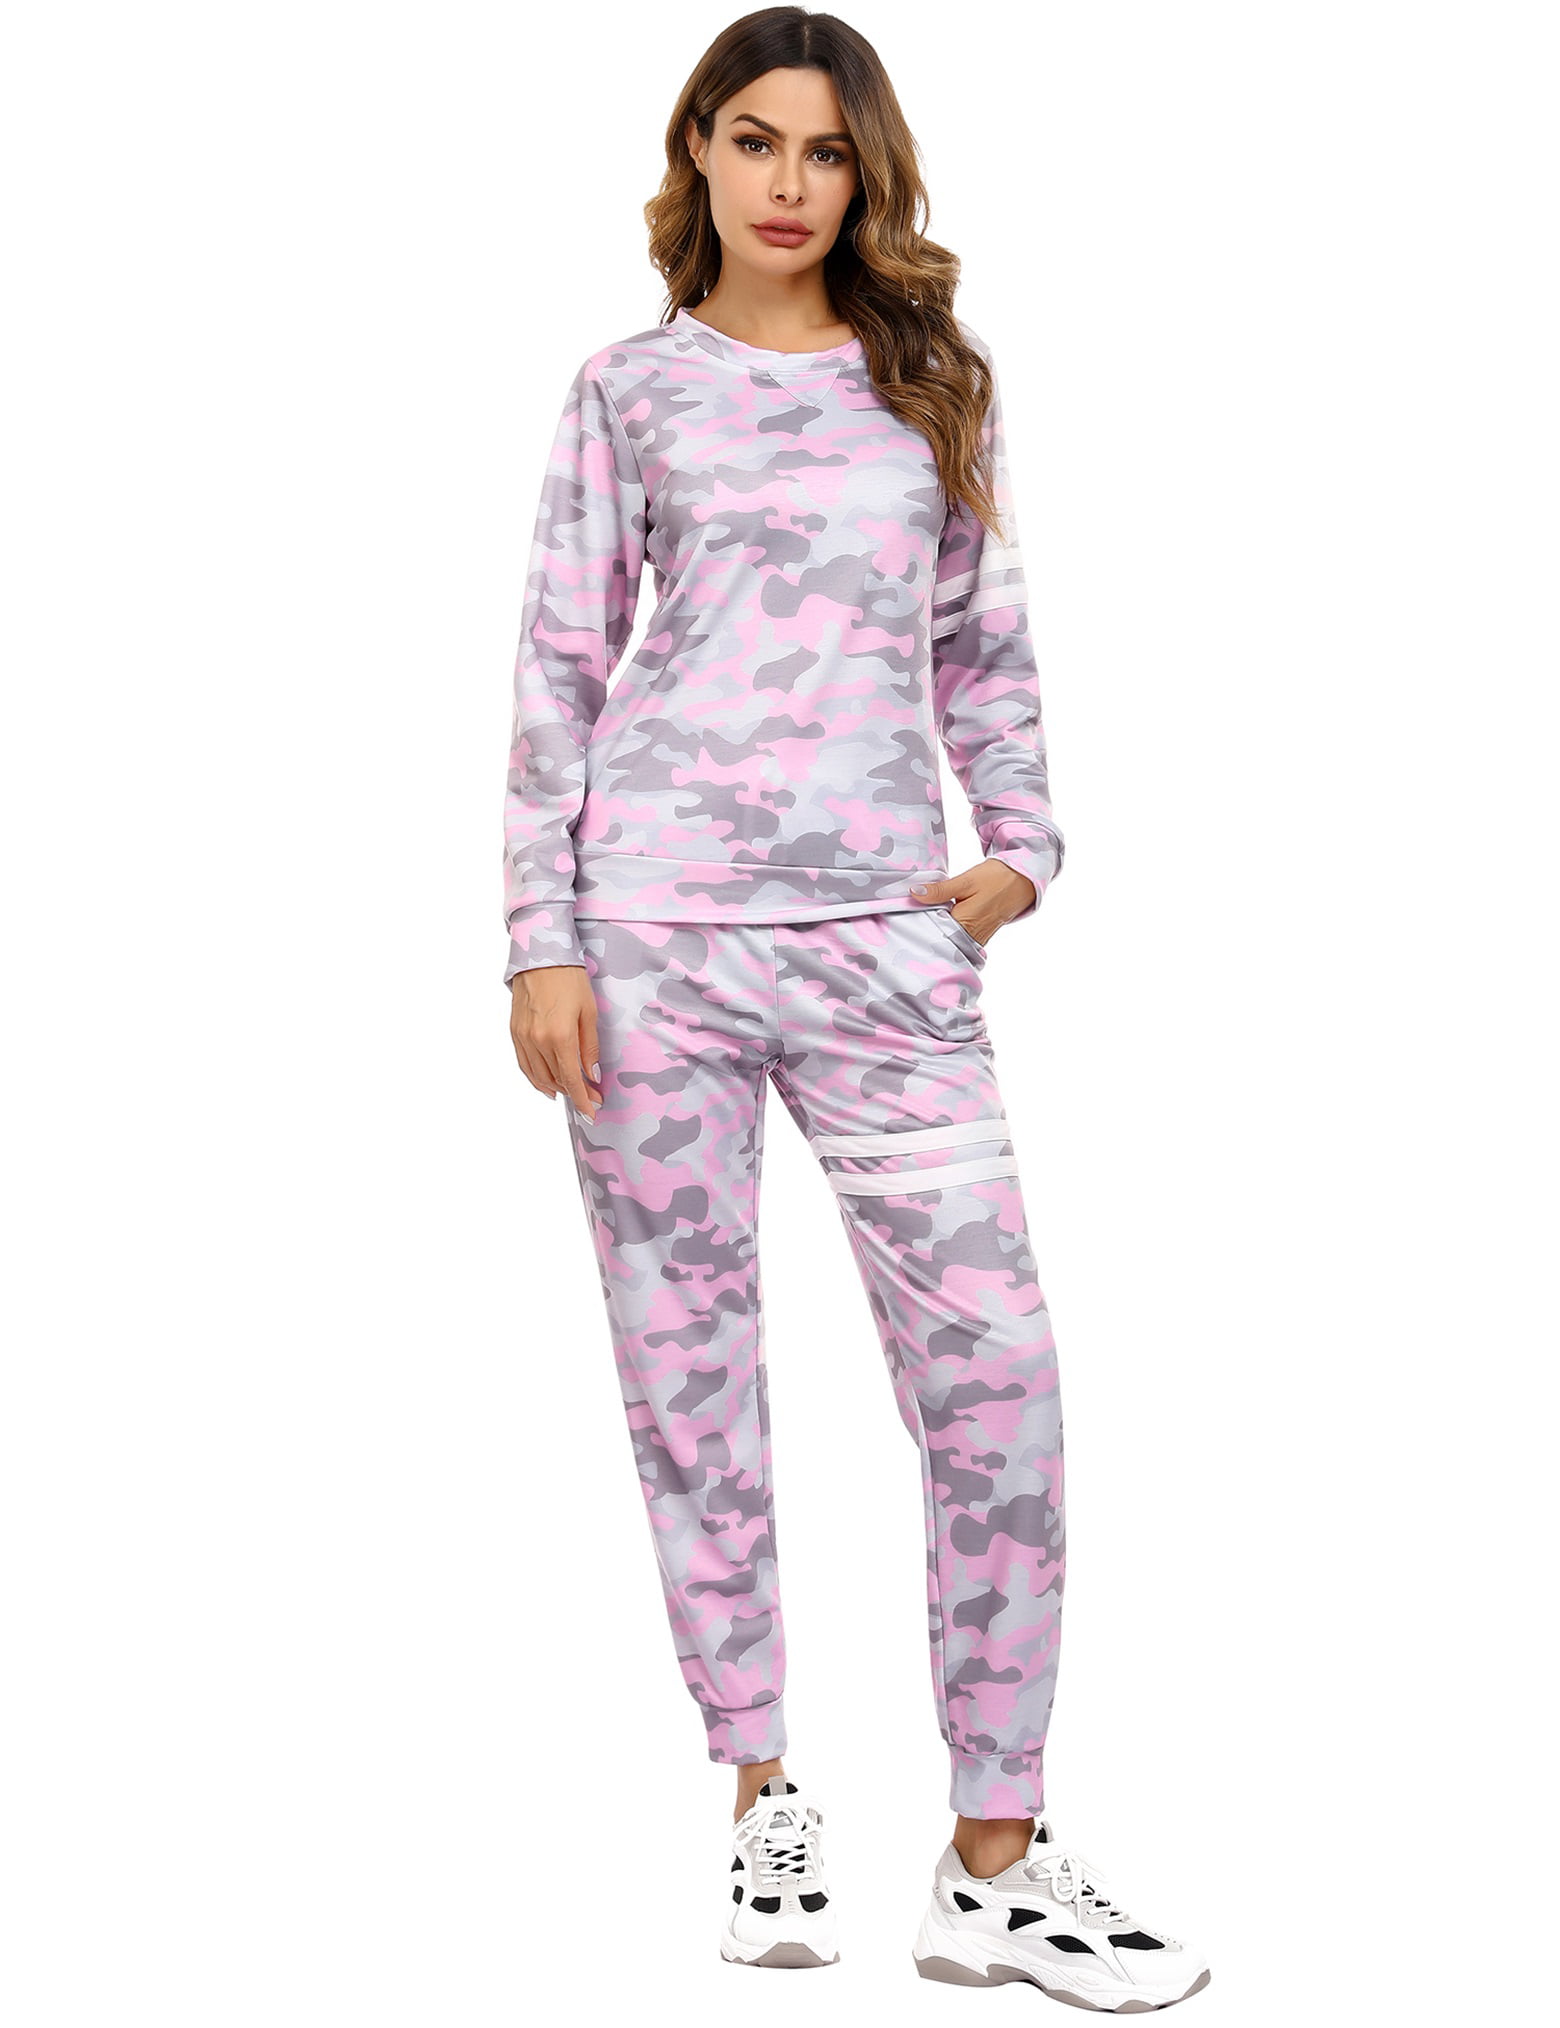 Doaraha Pyjama Set Women Cotton Checked Short or Long Sleeve Loungewear Top & Bottom Sleepwear Nightwear with Pockets Drawstring